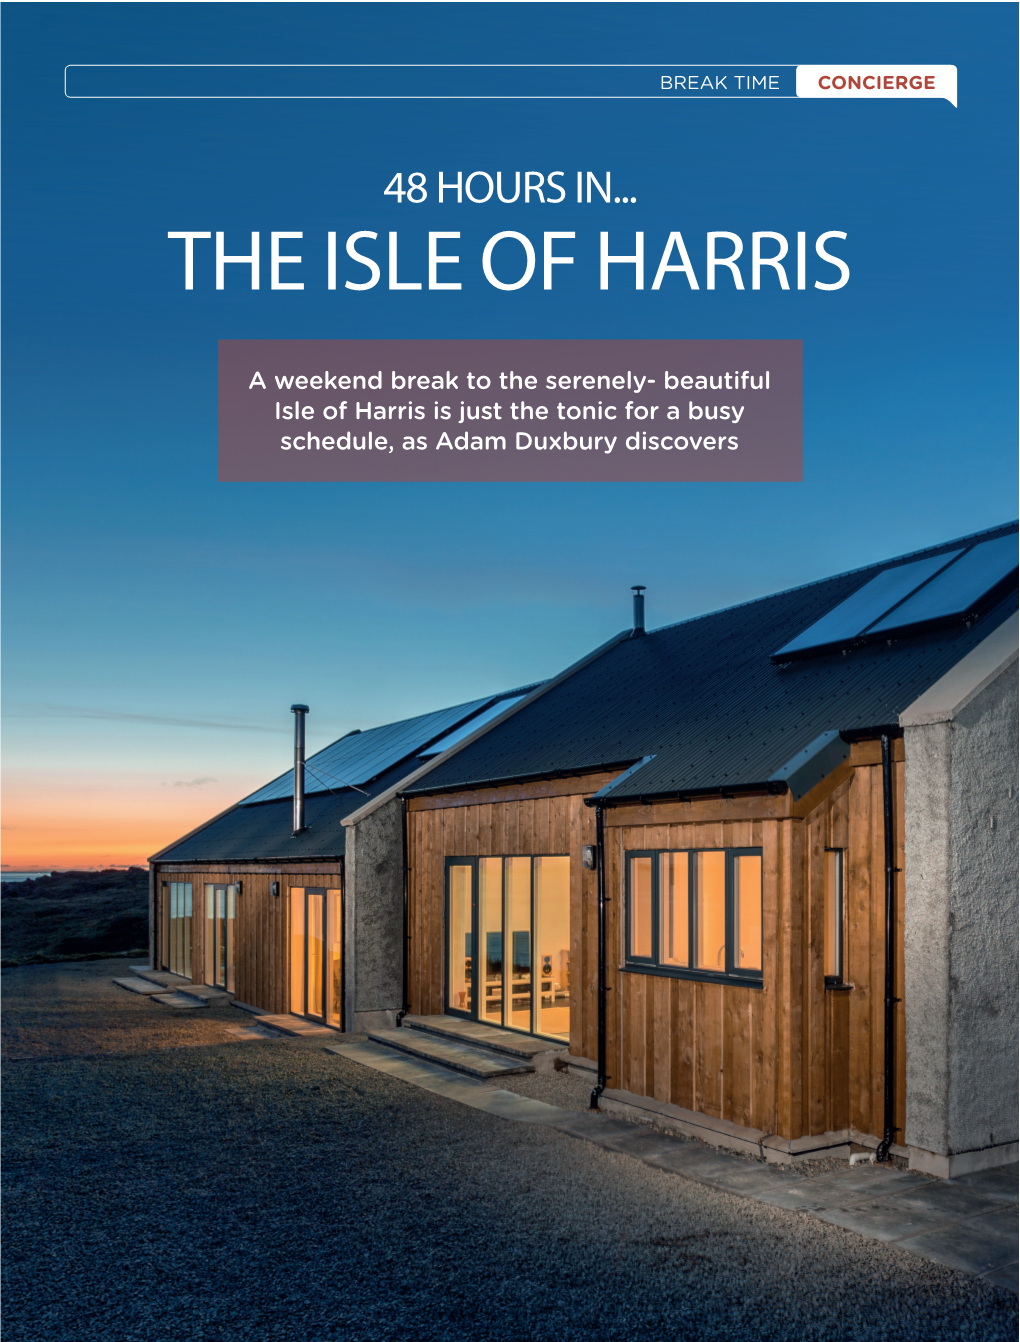 The Isle of Harris